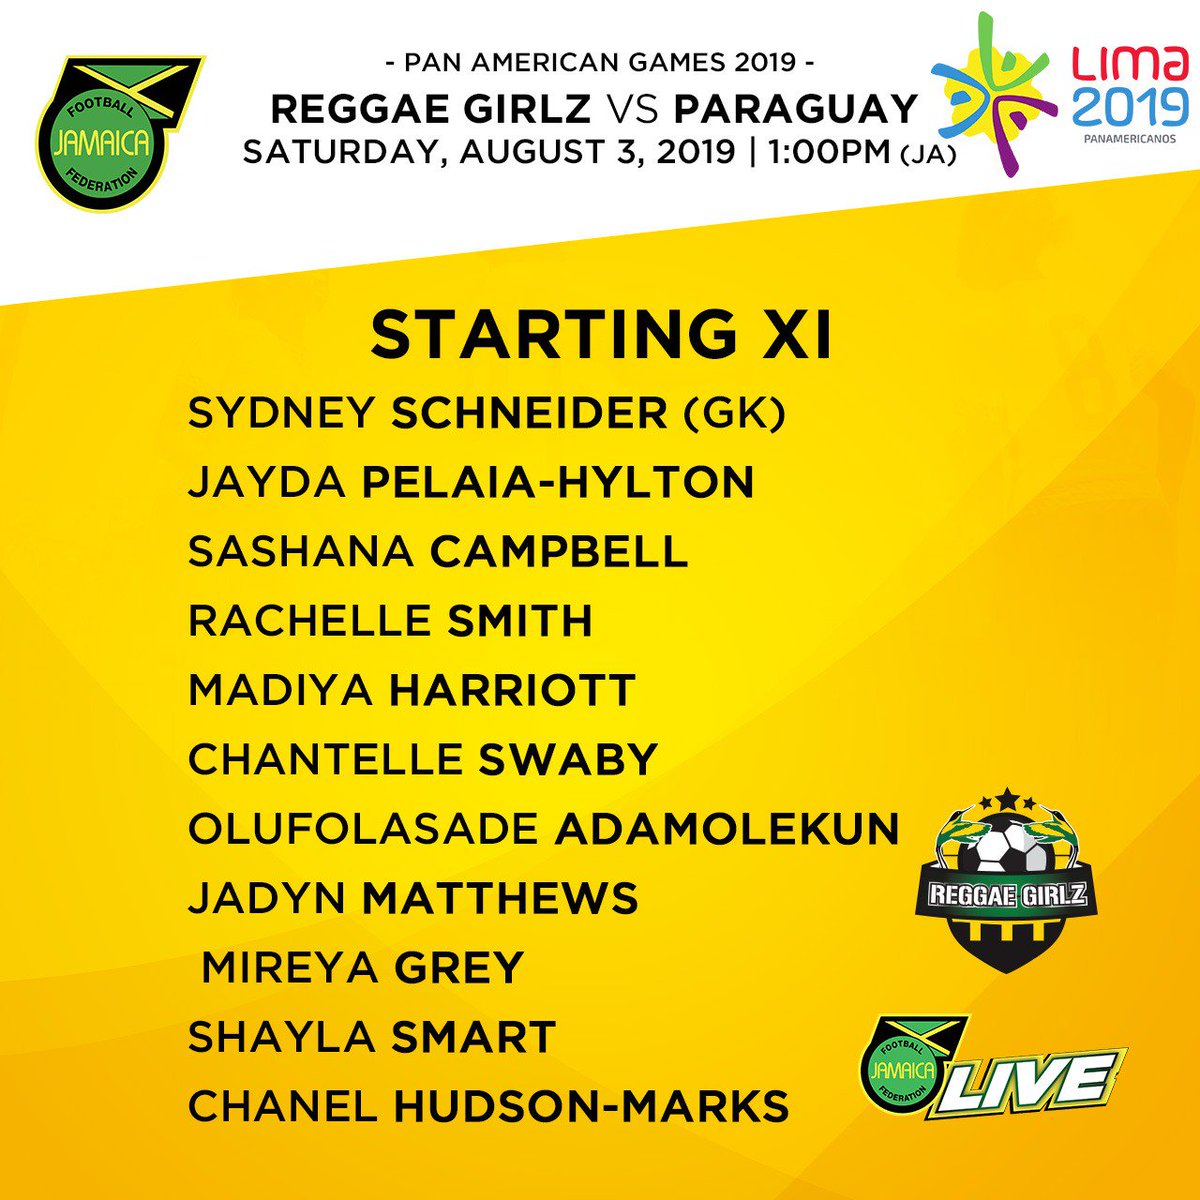 || Matchday 🇯🇲 vs 🇵🇾 ||#ReggaeGirlz starting XI for their game against Paraguay ! ||#PanAmGames🏆
Matchtime: 1PM
Tune in to ESPN for the action 🇯🇲🇯🇲🇯🇲 #JFFLive
#ReggaeGirlz
#ReggaeFootball
#StillOnTheBall